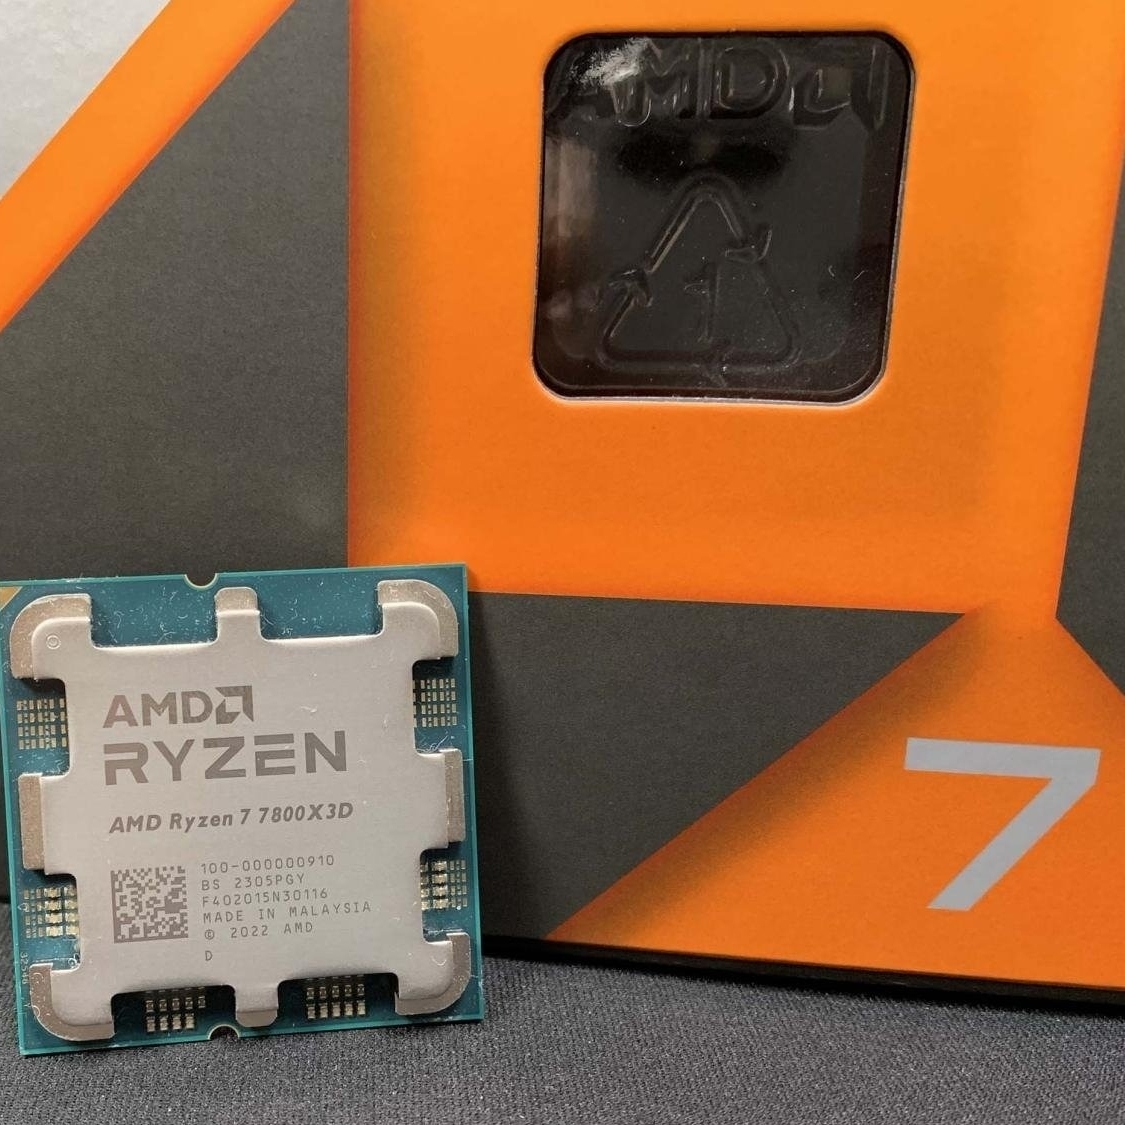 AMD Ryzen 7 7800X3D CPU Drops to Just $406